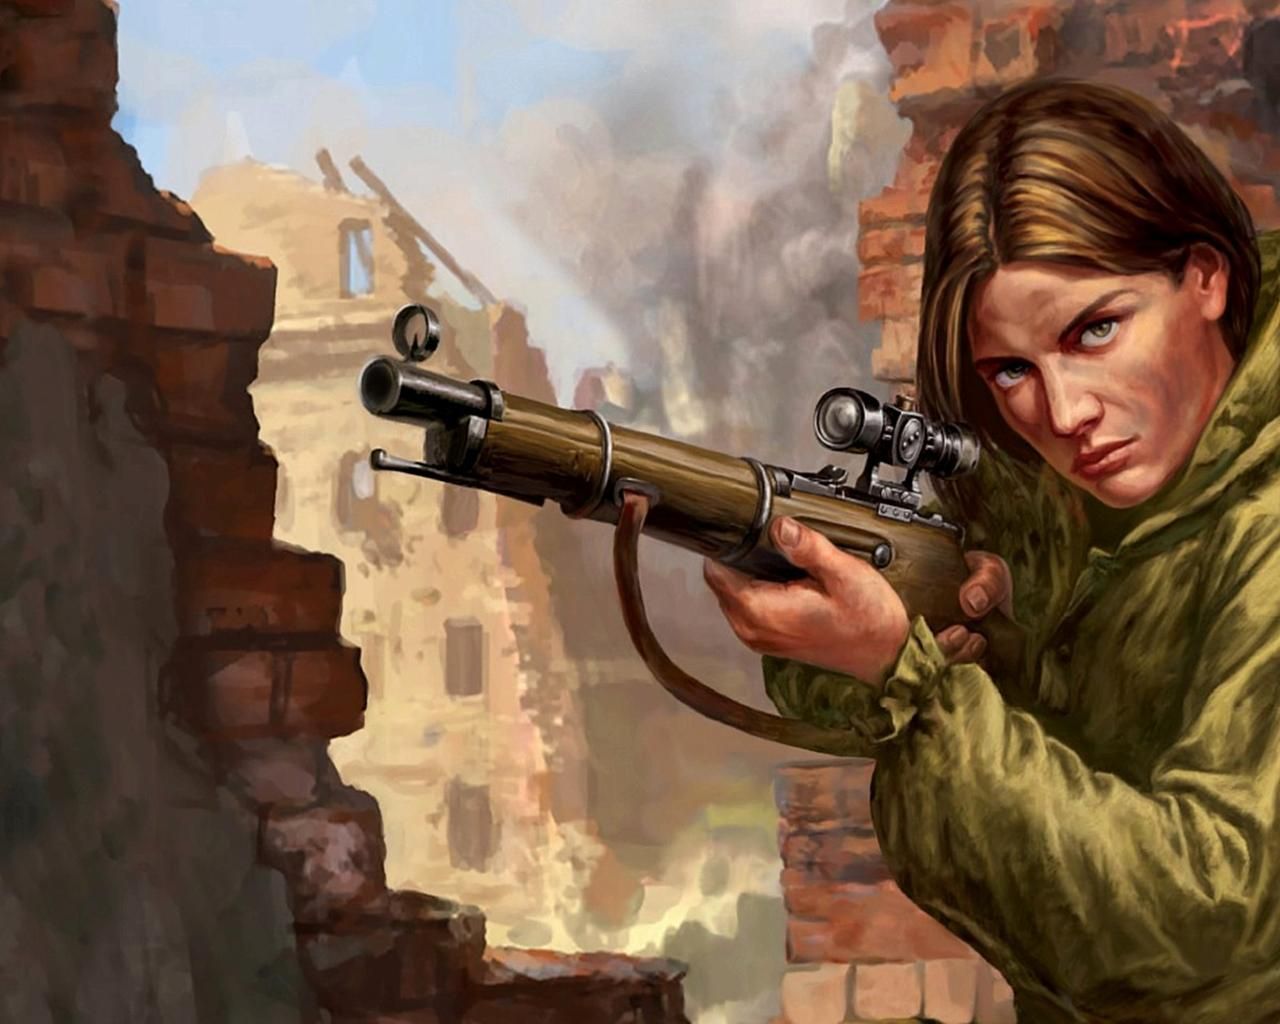 Download wallpaper: girl sniper photo, girl sniper, download photo, wallpaper for desktop. Female warrior art, Sniper, Sniper art